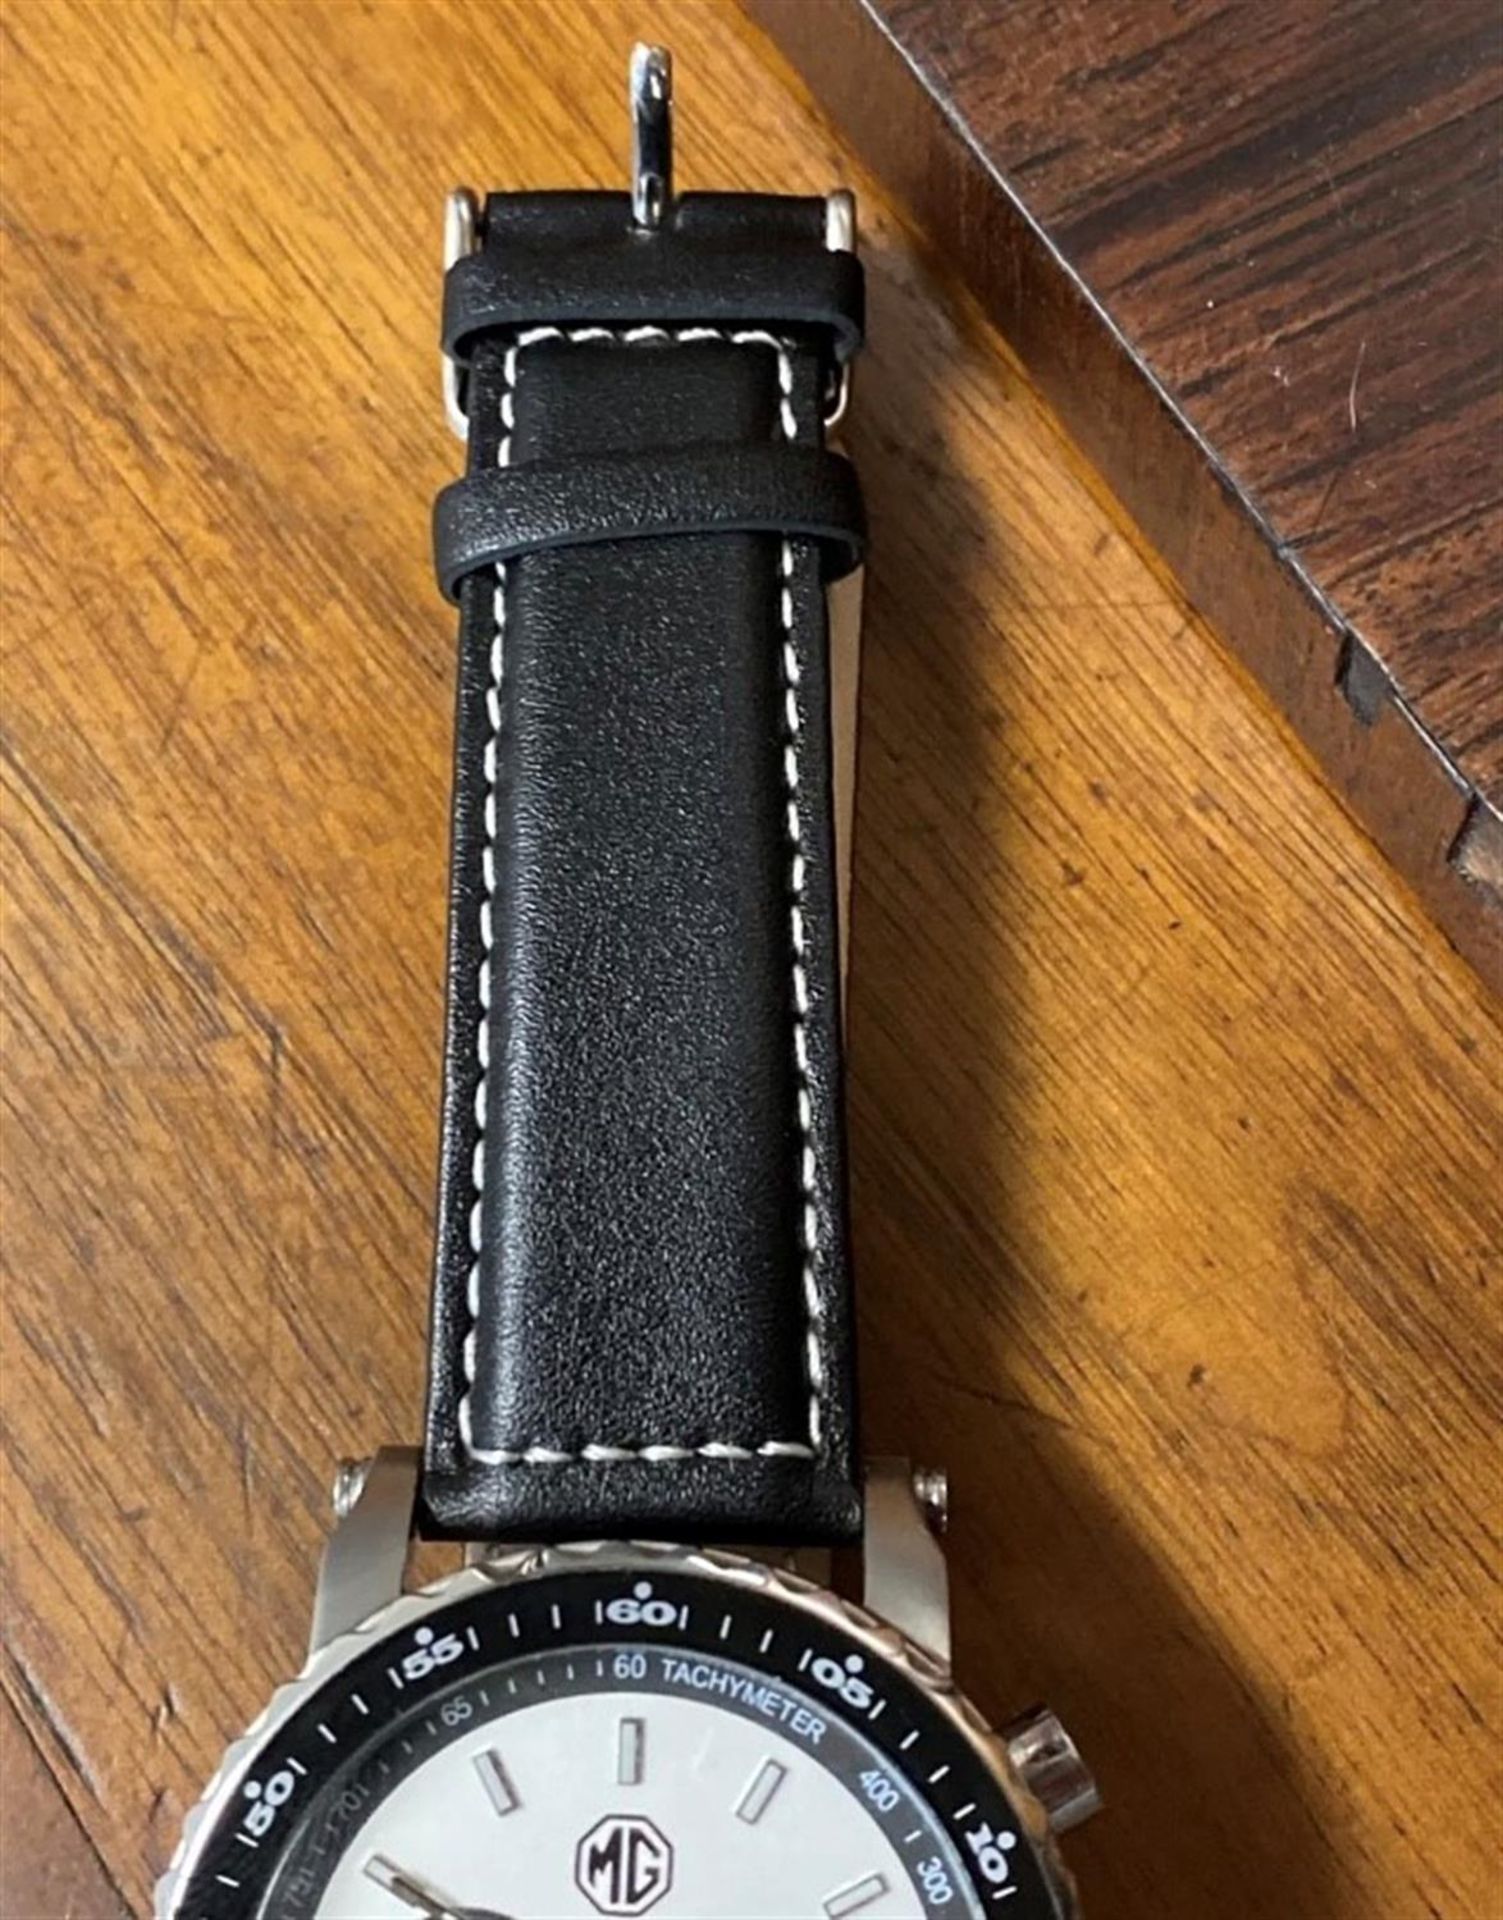 An MG Themed Chronograph Gentleman's Wristwatch - Image 8 of 8